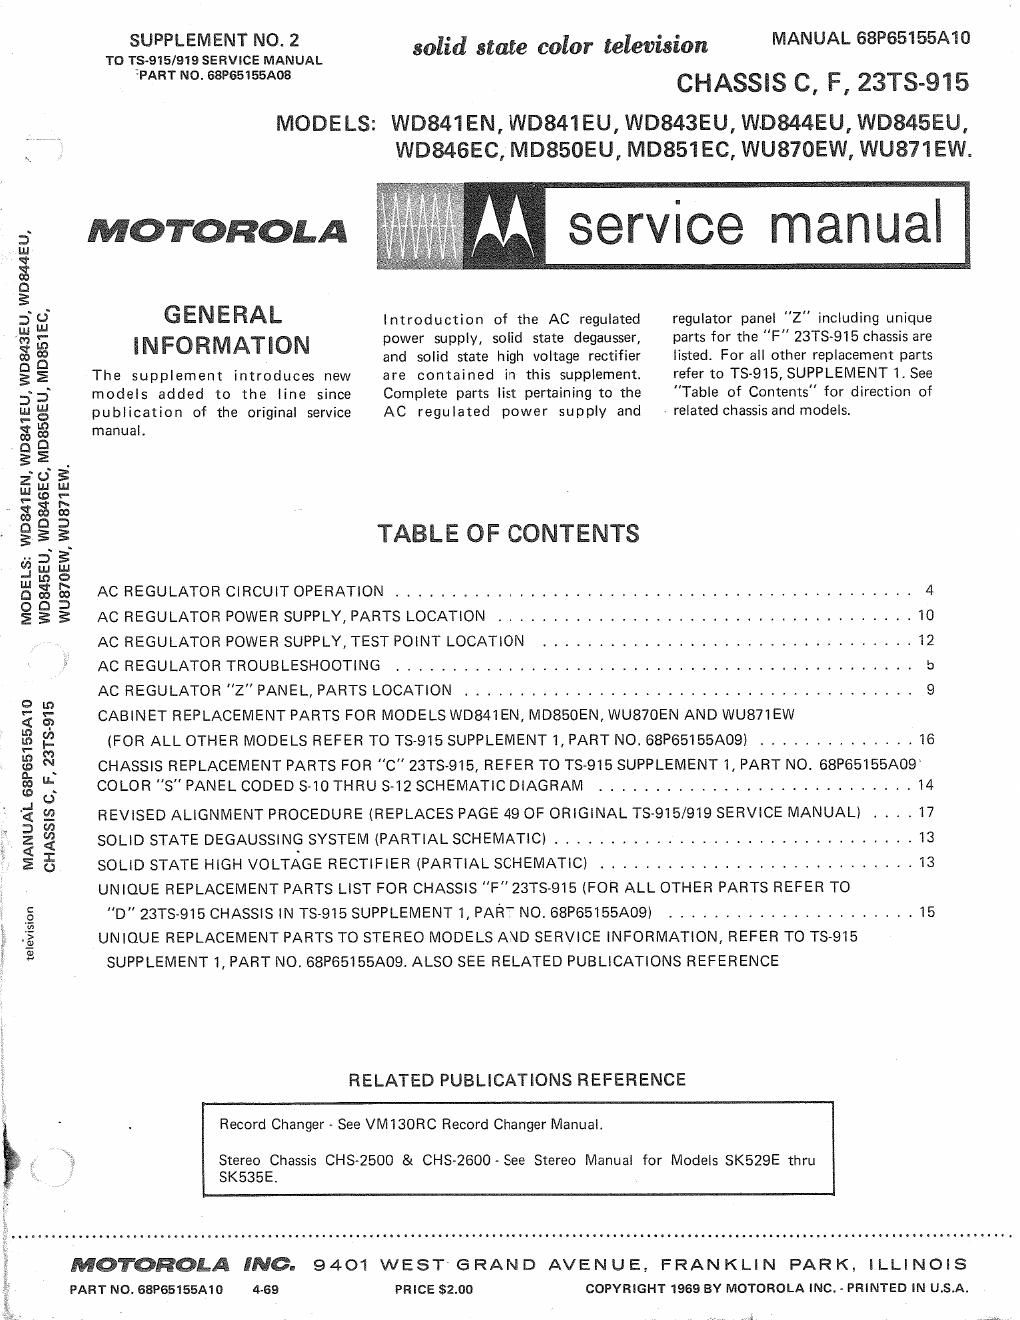 motorola wd 841 en service manual